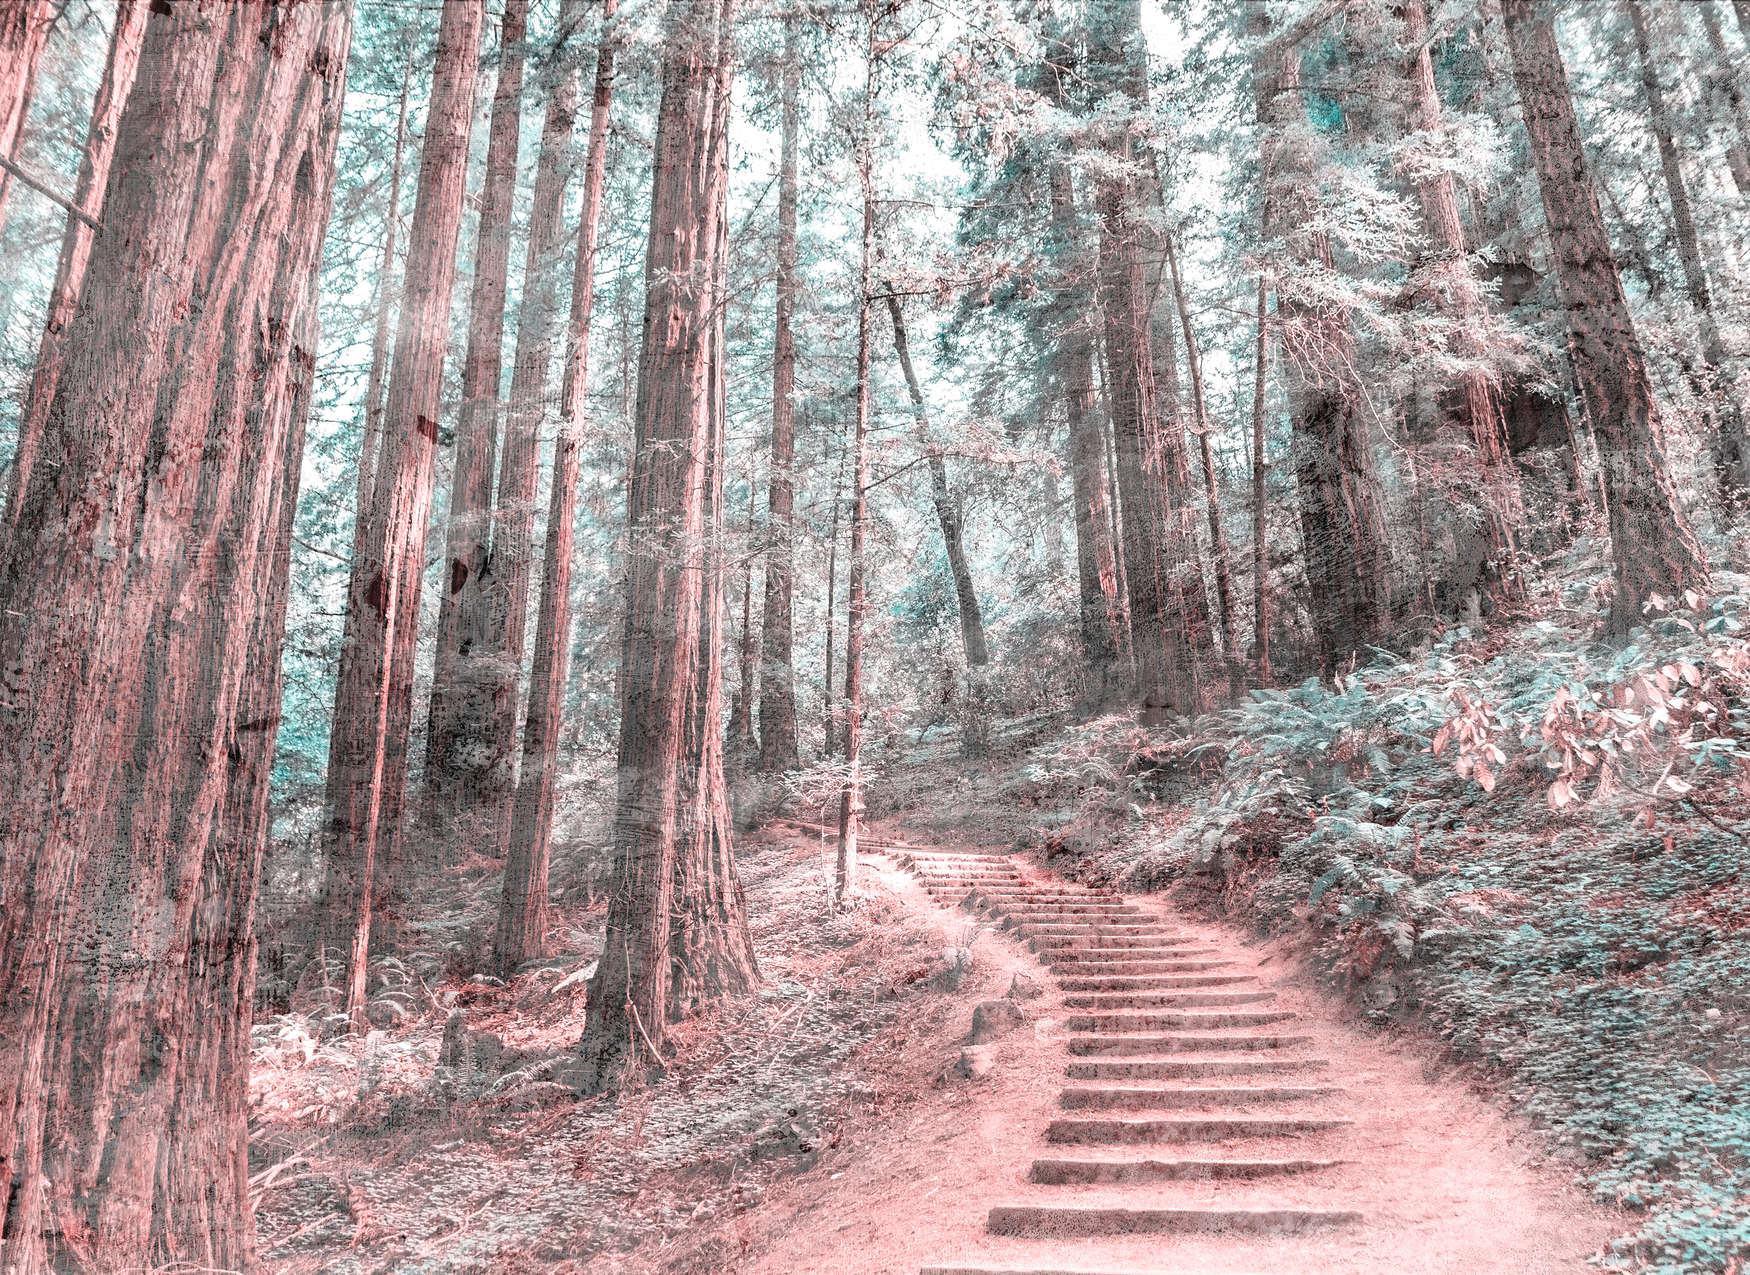             Holztreppe durch den Wald – Braun, Grün, Weiß
        